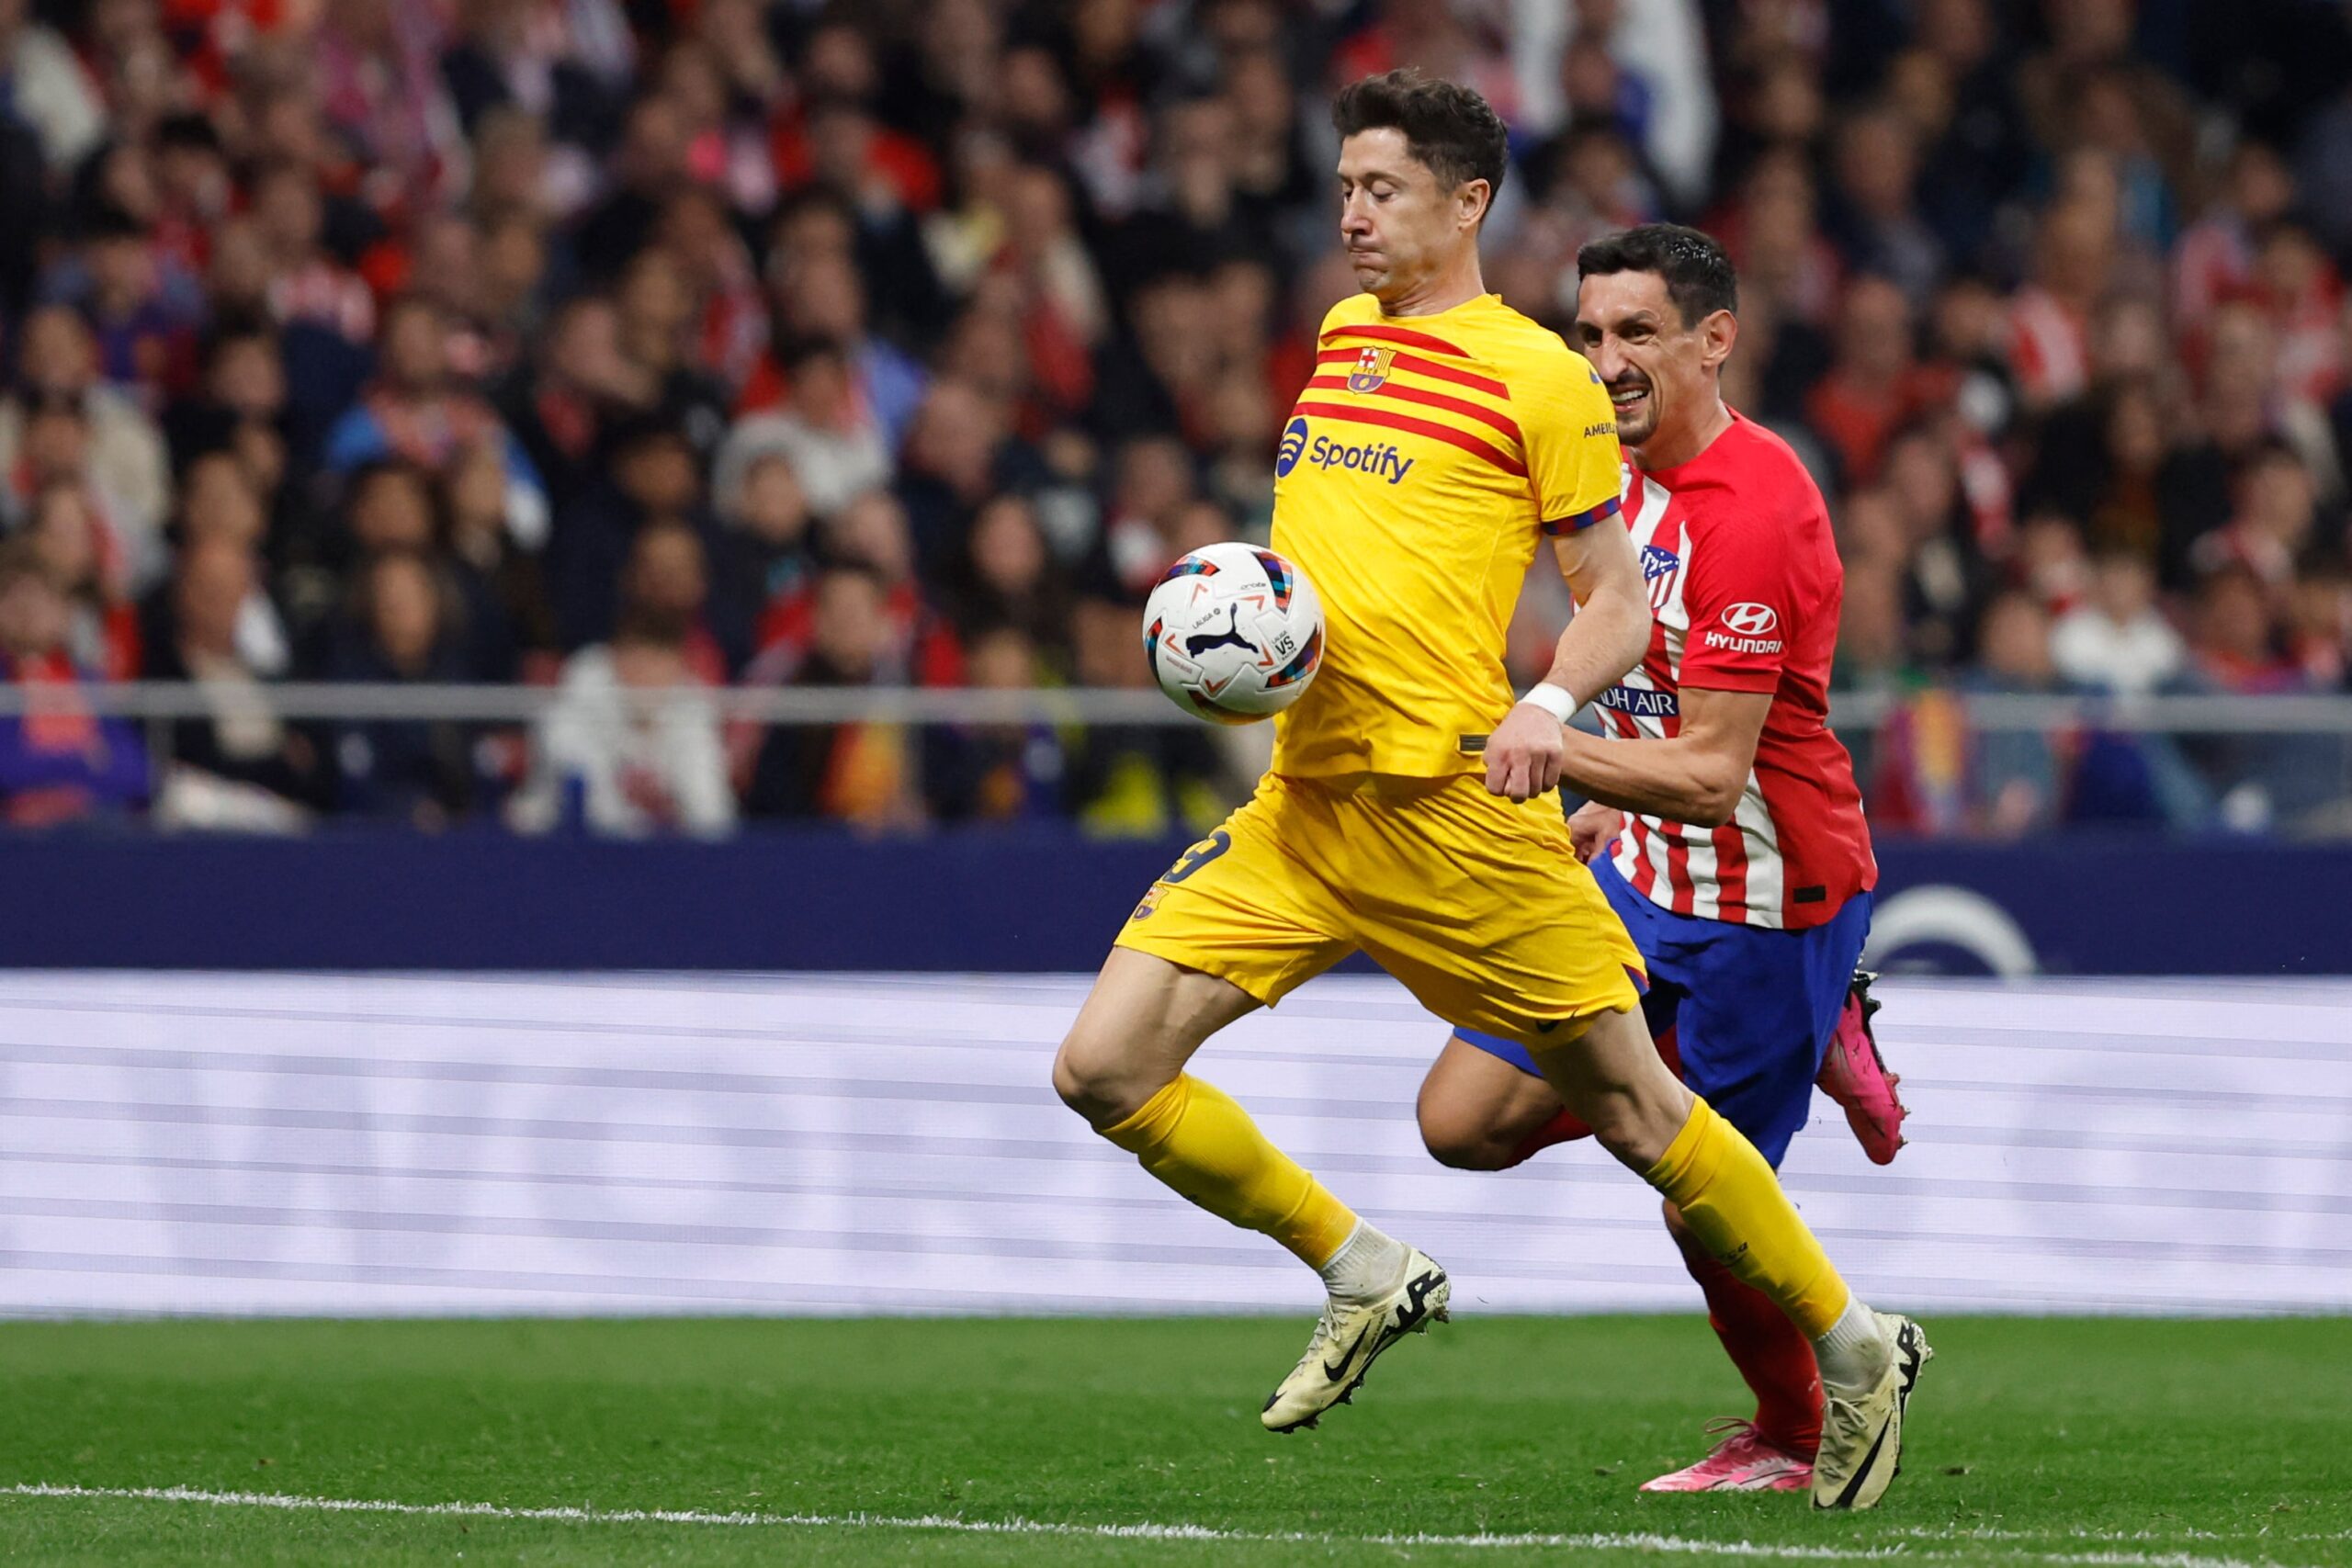 Robert Lewandowski-Powered Barcelona Thrash Atletico Madrid To Stay In Title Race